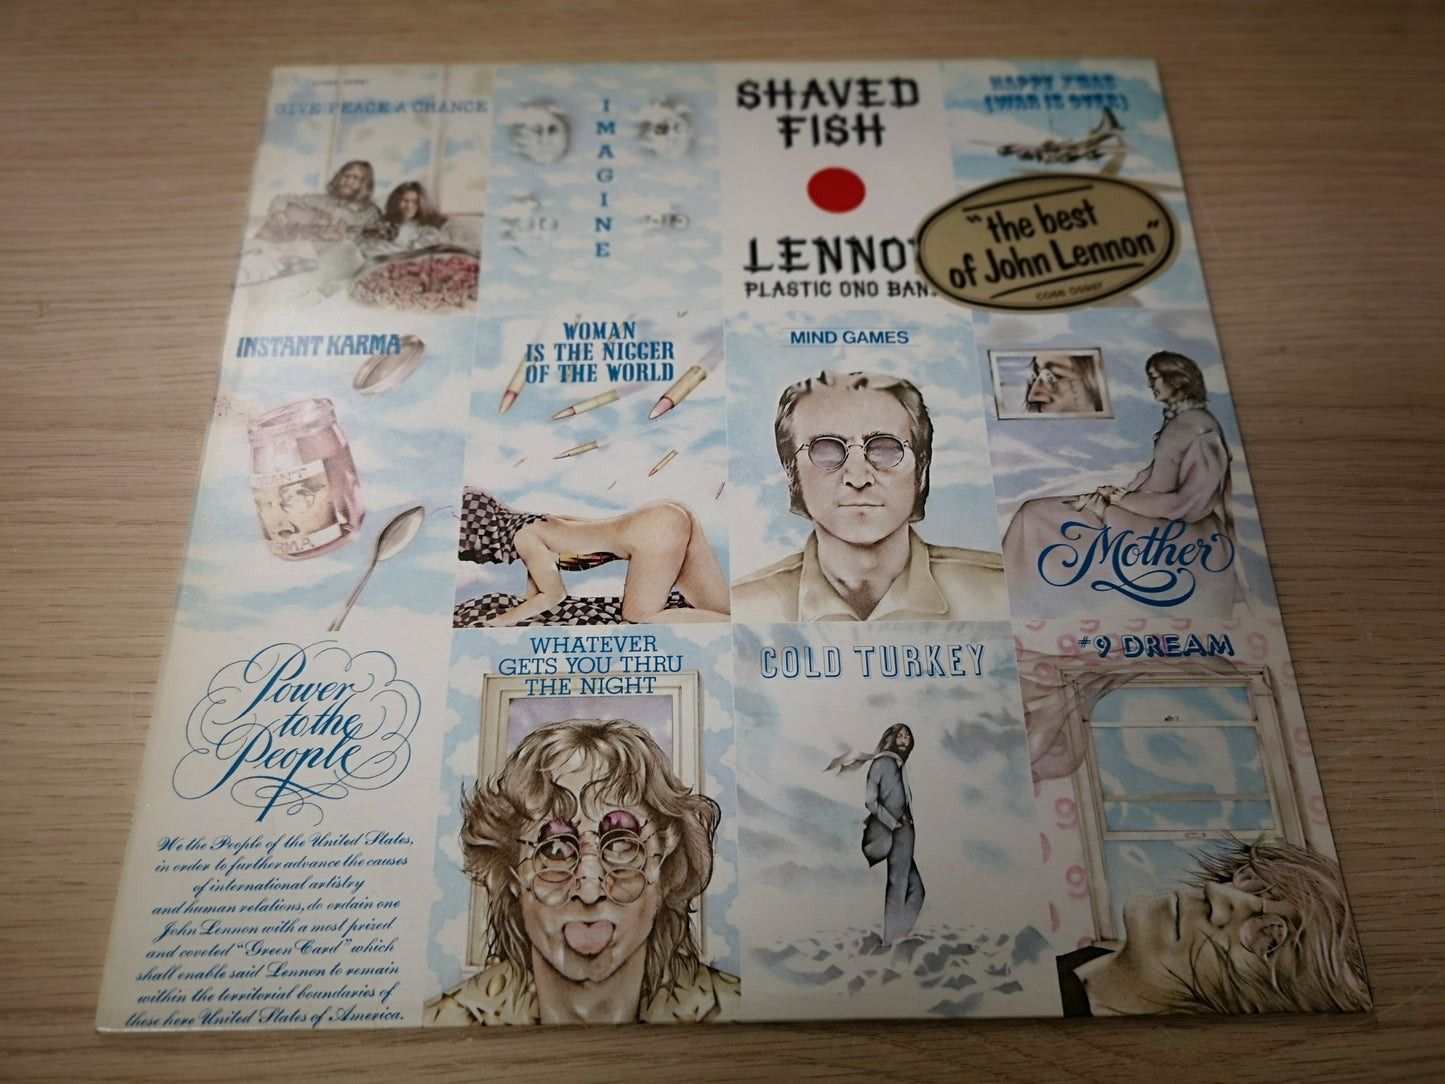 John Lennon "Shaved Fish" Re France 1978 M-/M- (2nd Press)